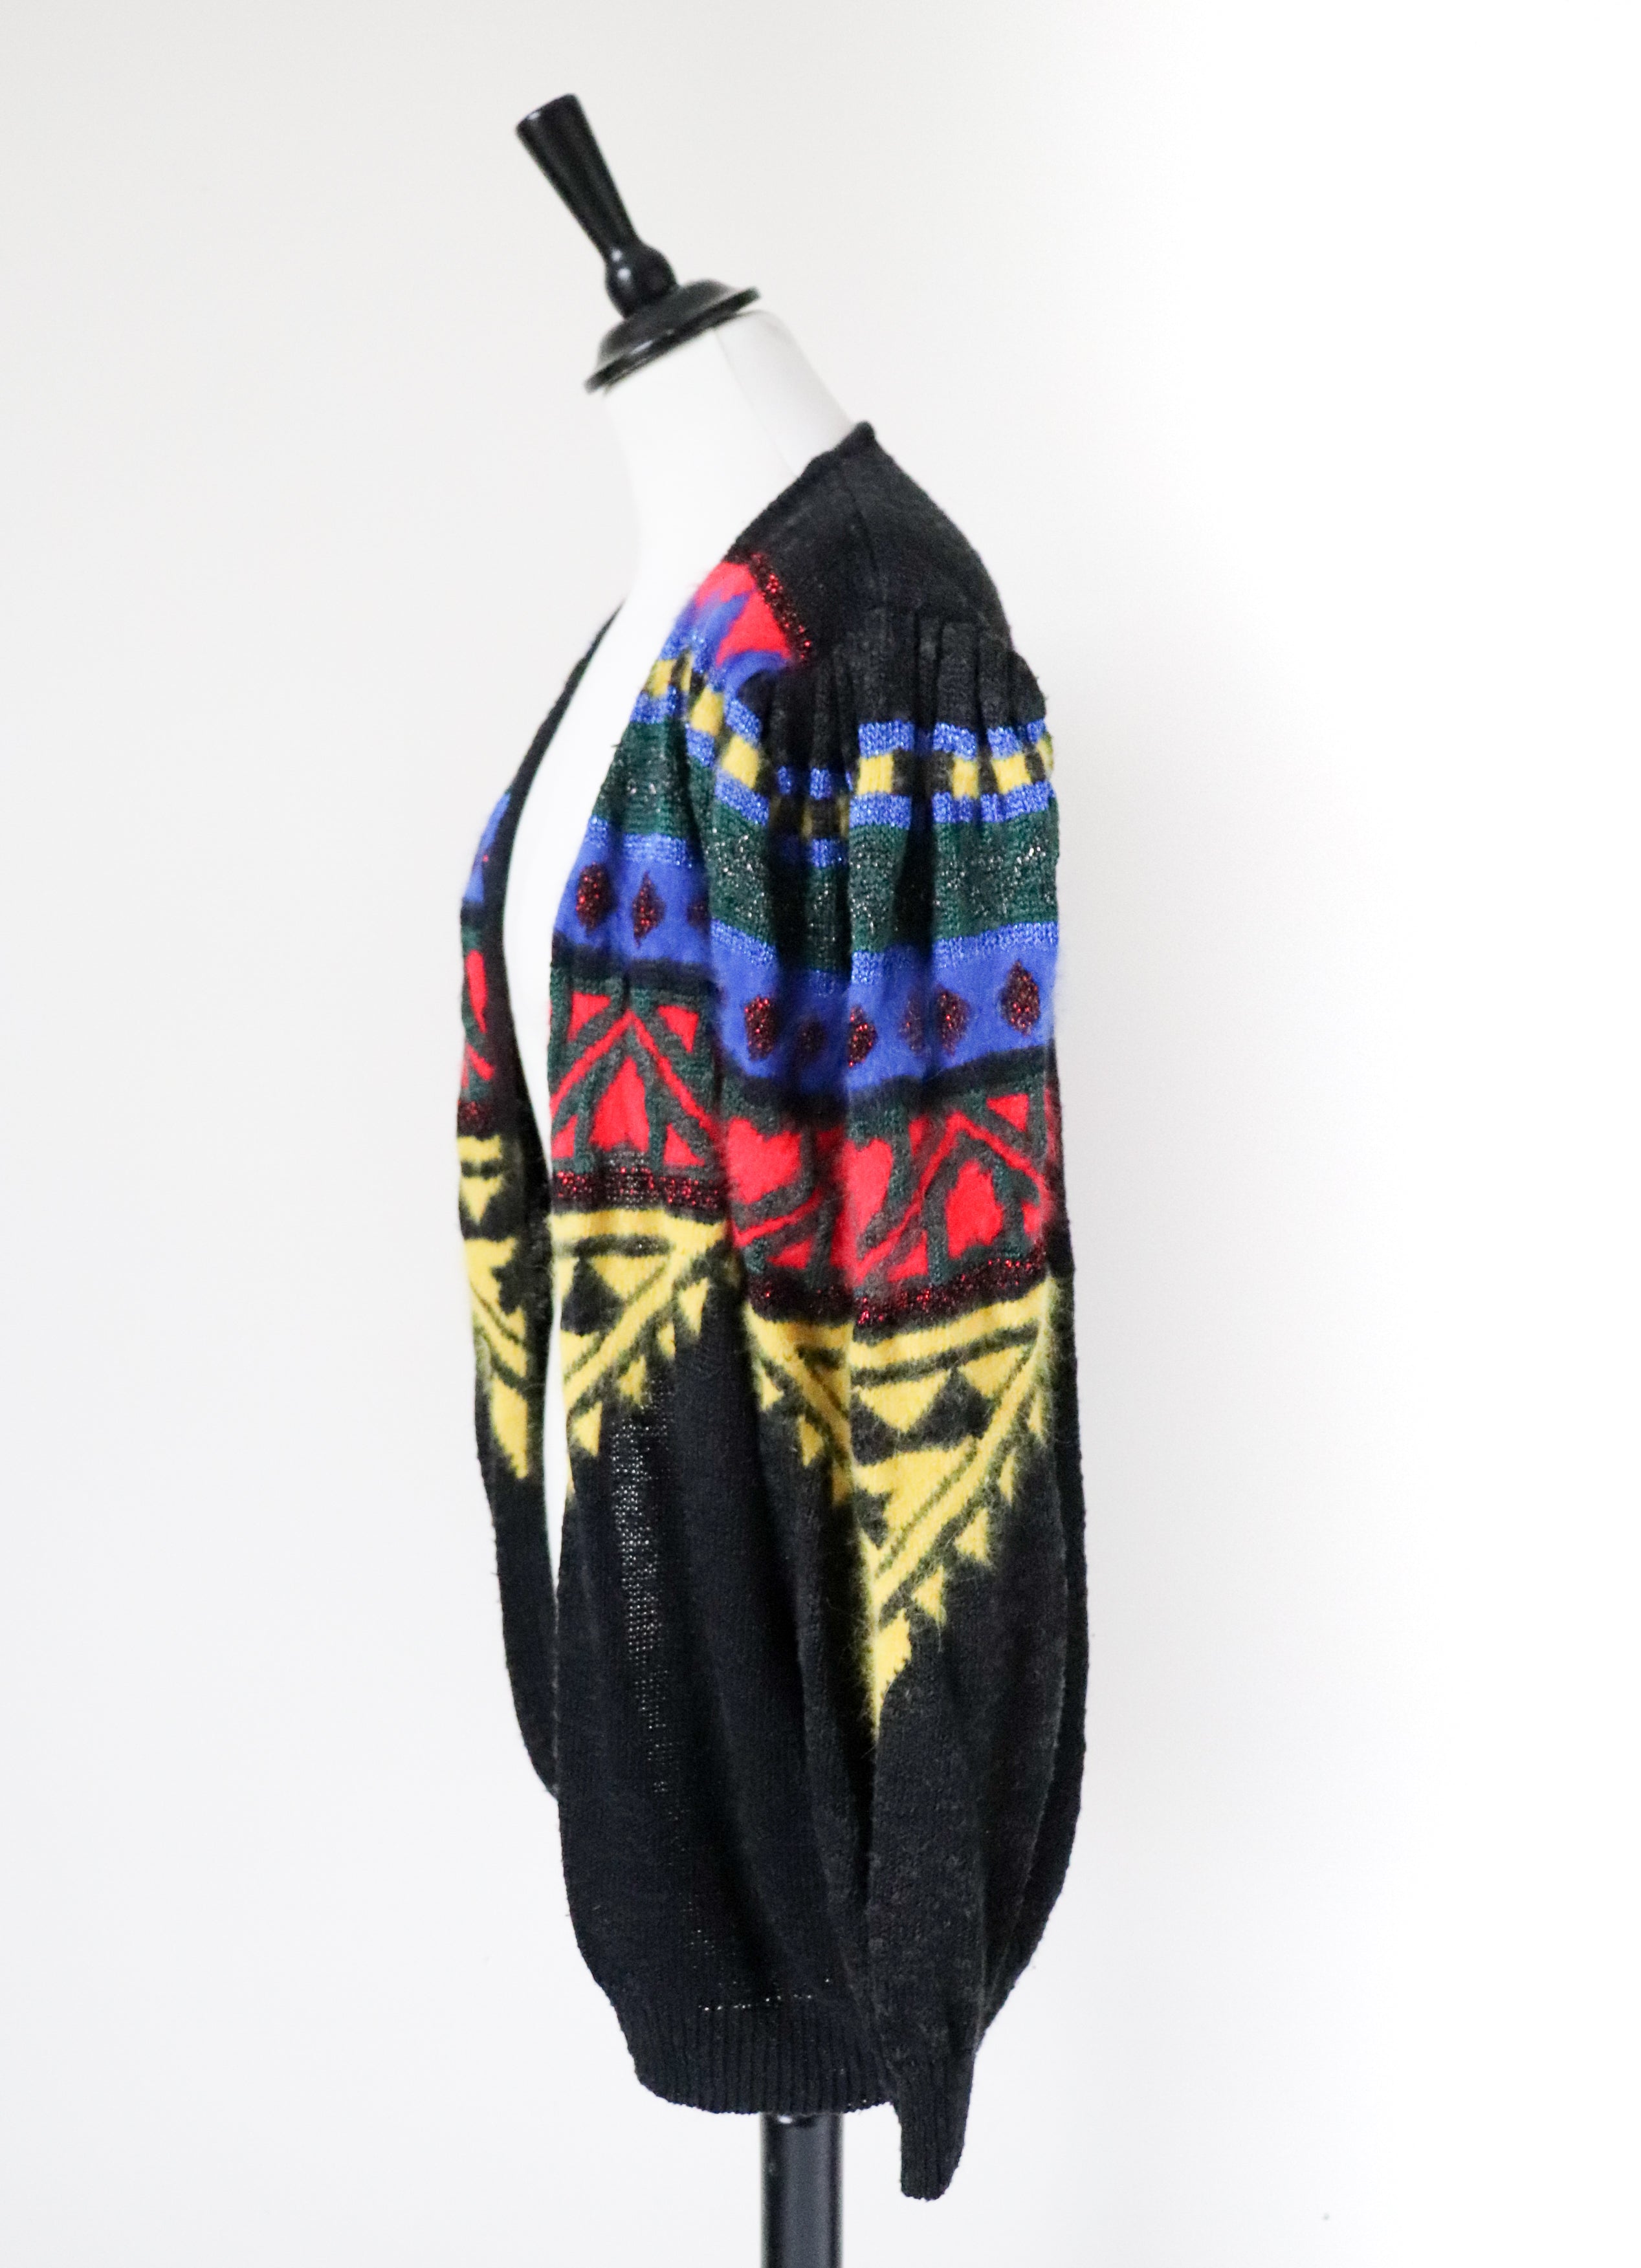 Vintage Wool Blend Cardigan - 1980s - Black / Multicolours - S / M - UK 10 / 12